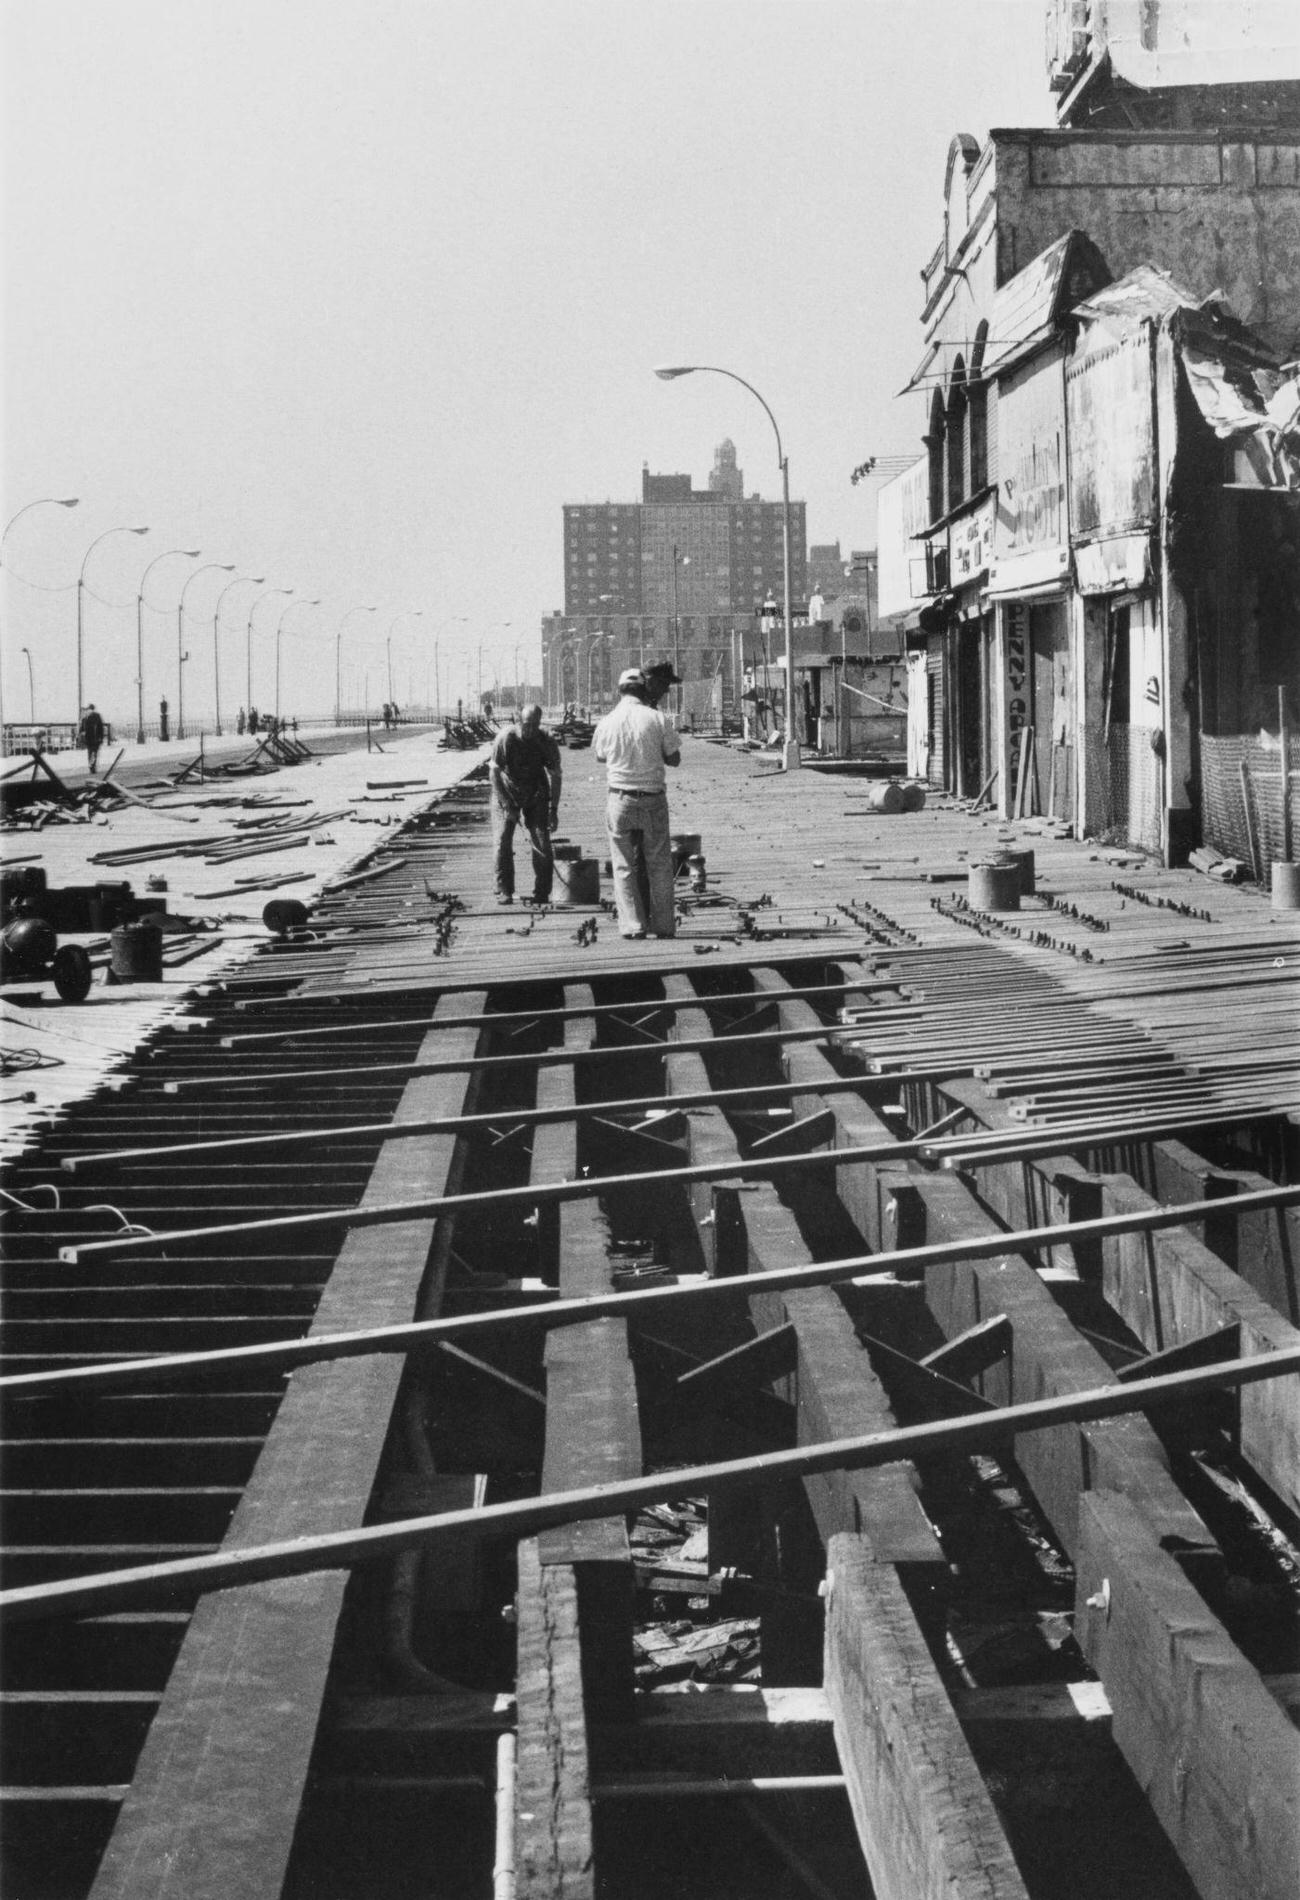 Last Minute Renovations At Coney Island Boardwalk, March 1978